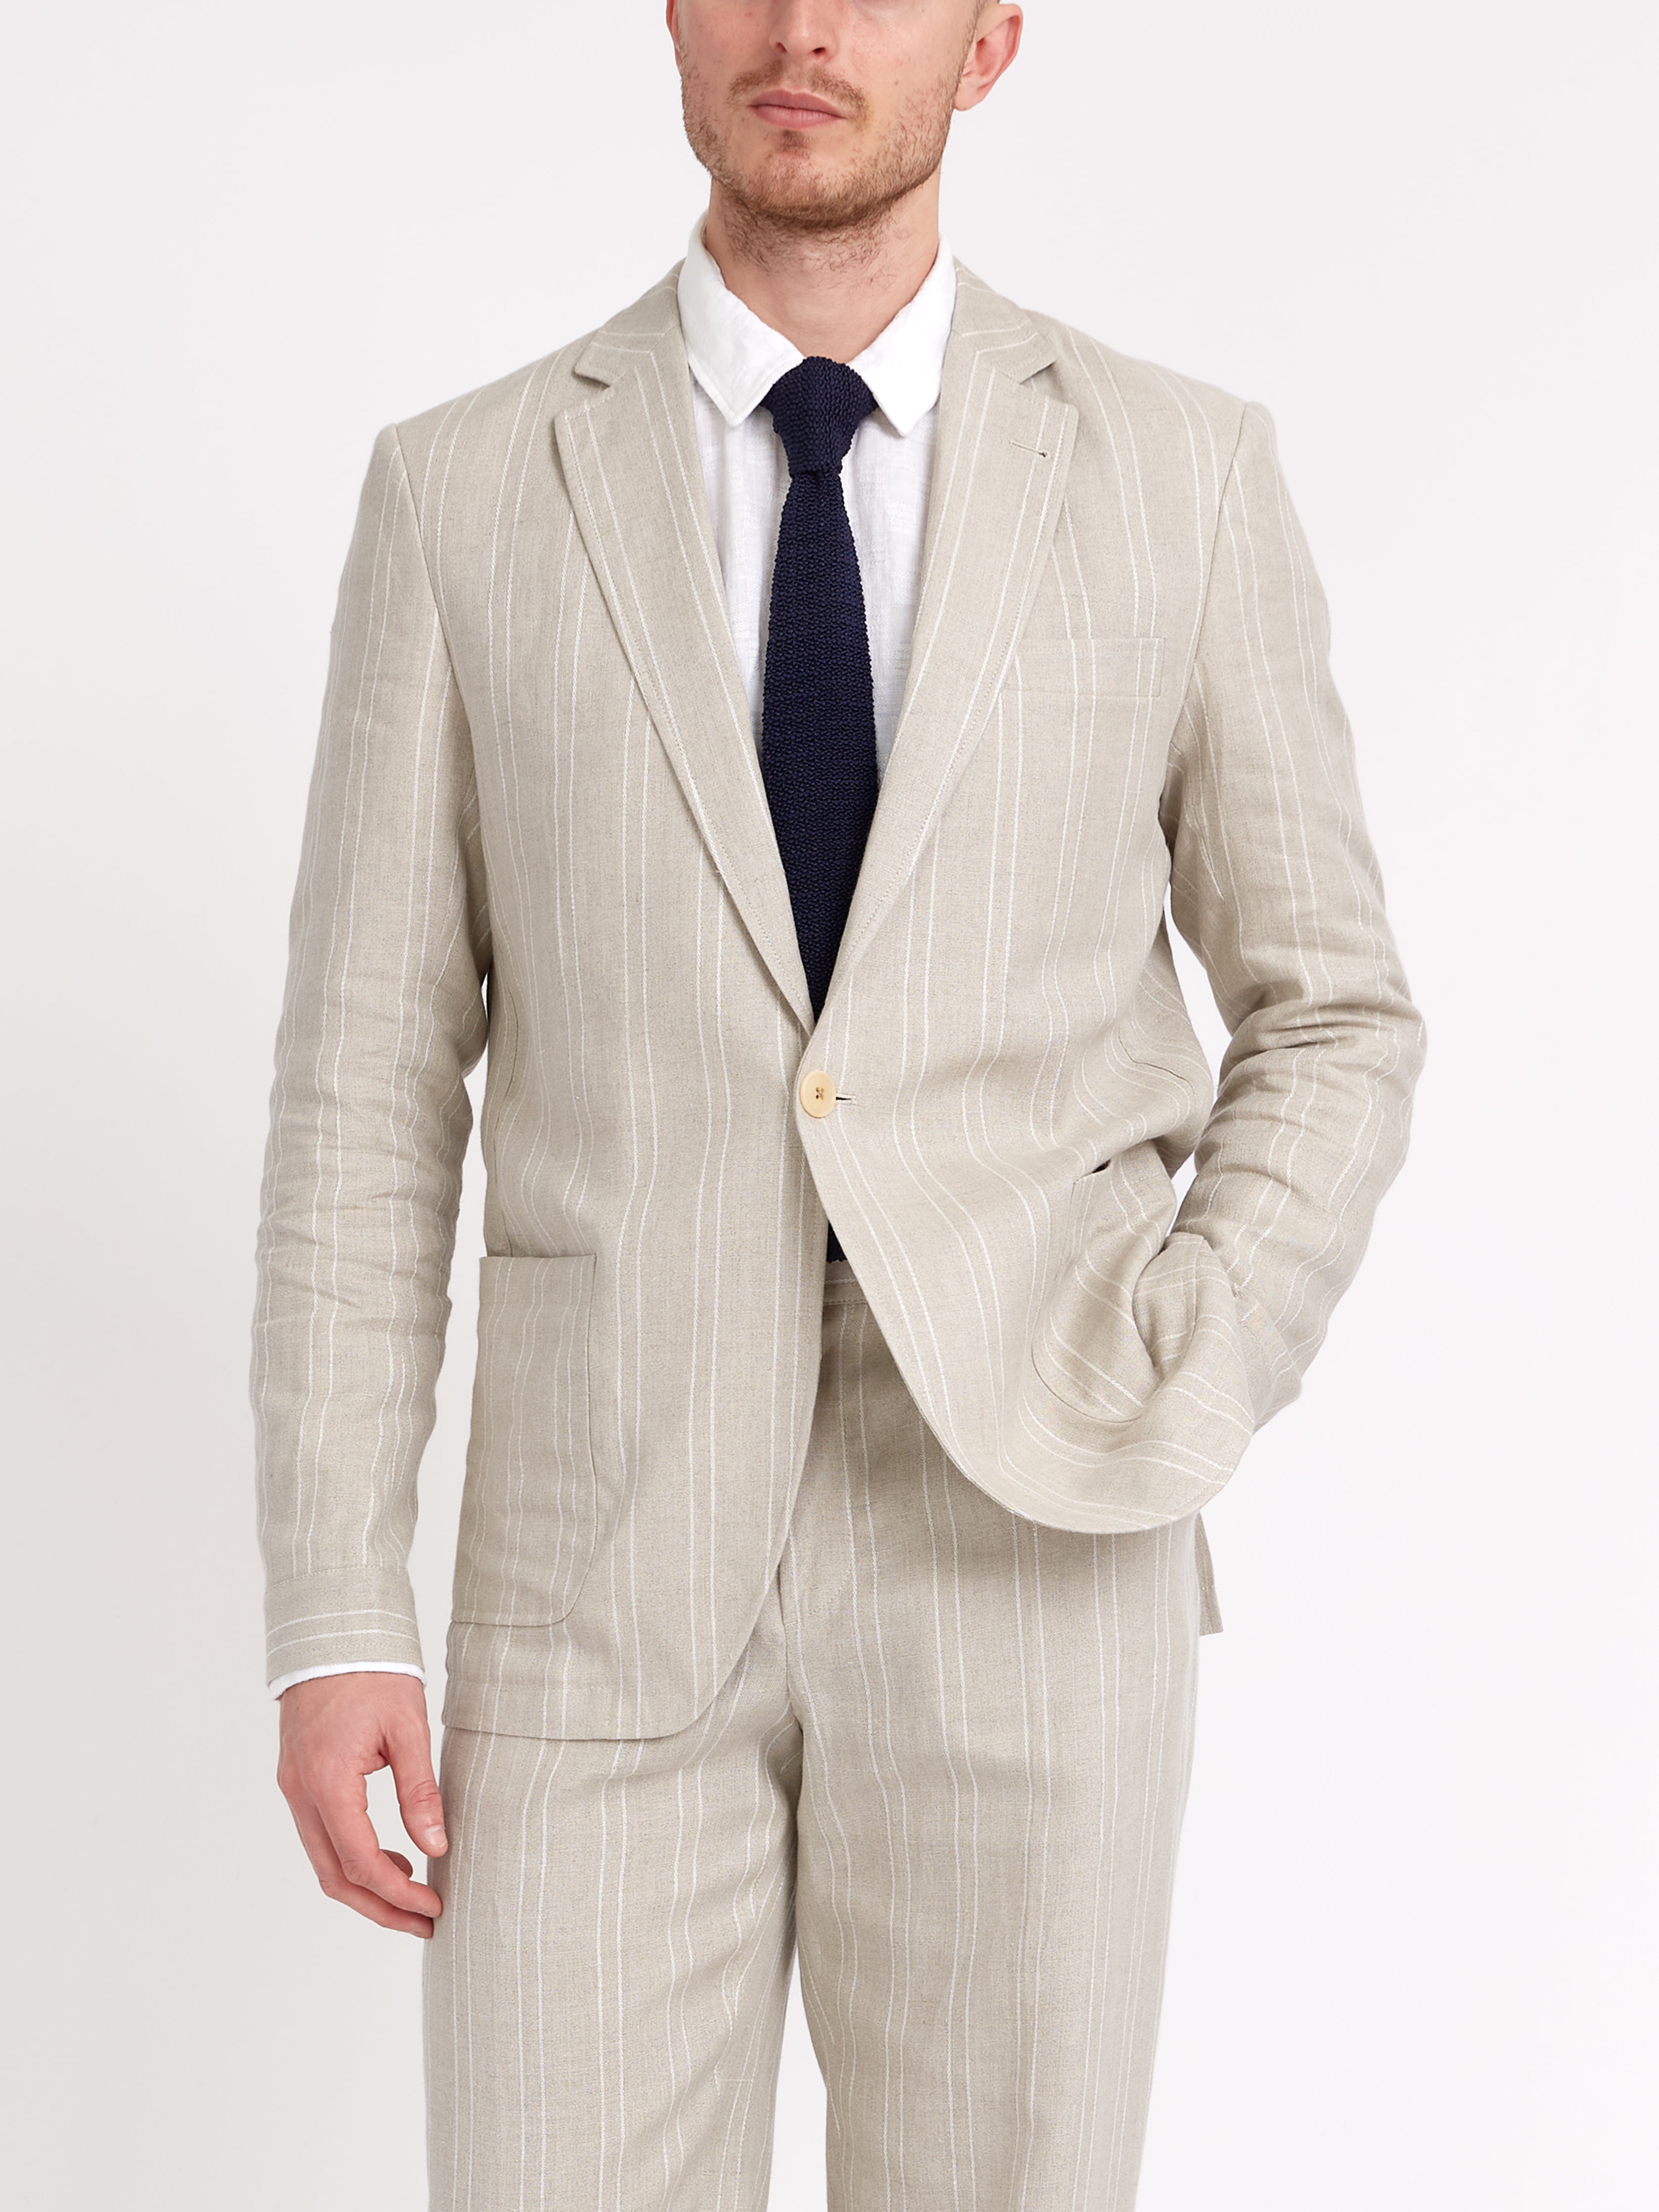 Sand Middelboe Theobald Suit